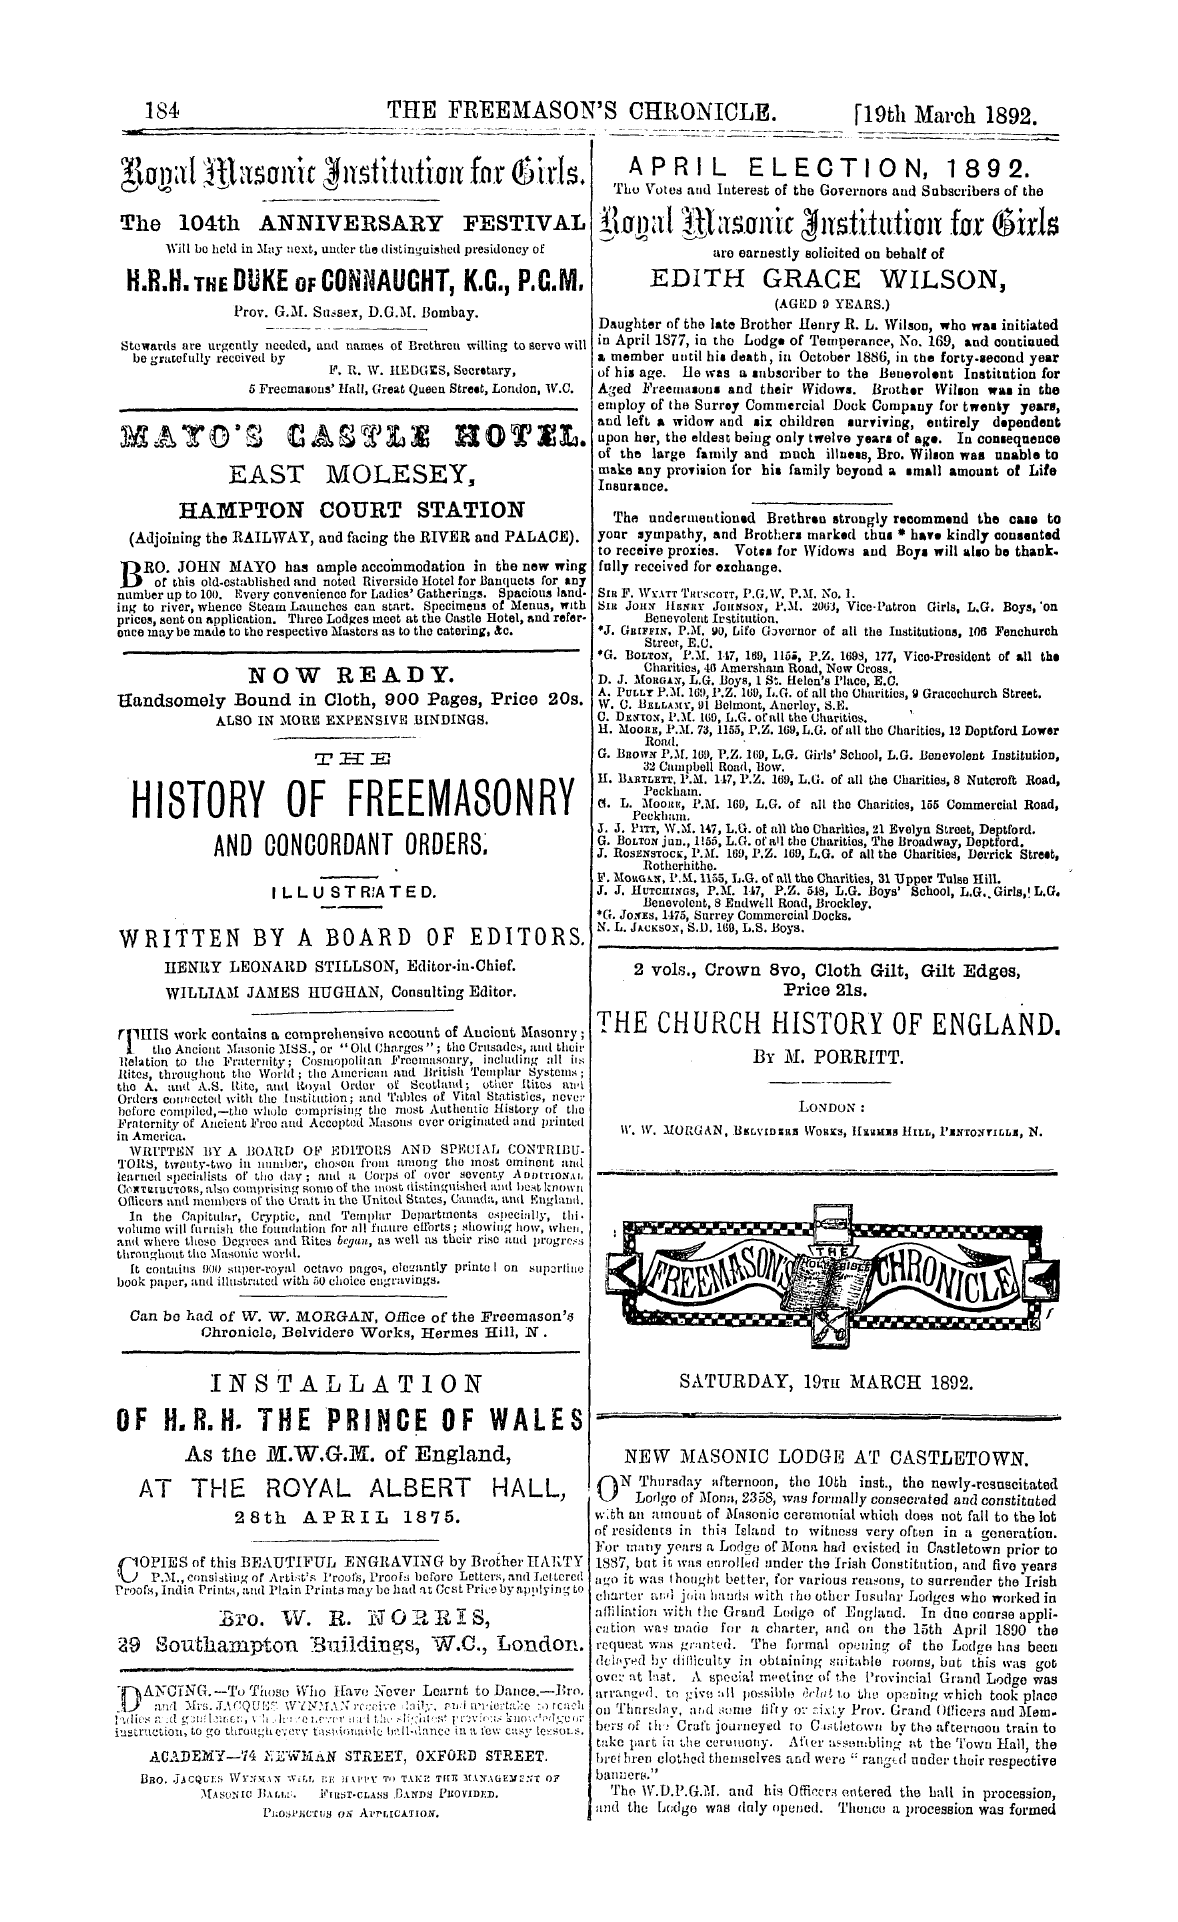 The Freemason's Chronicle: 1892-03-19 - New Masonic Lodge At Castletown.